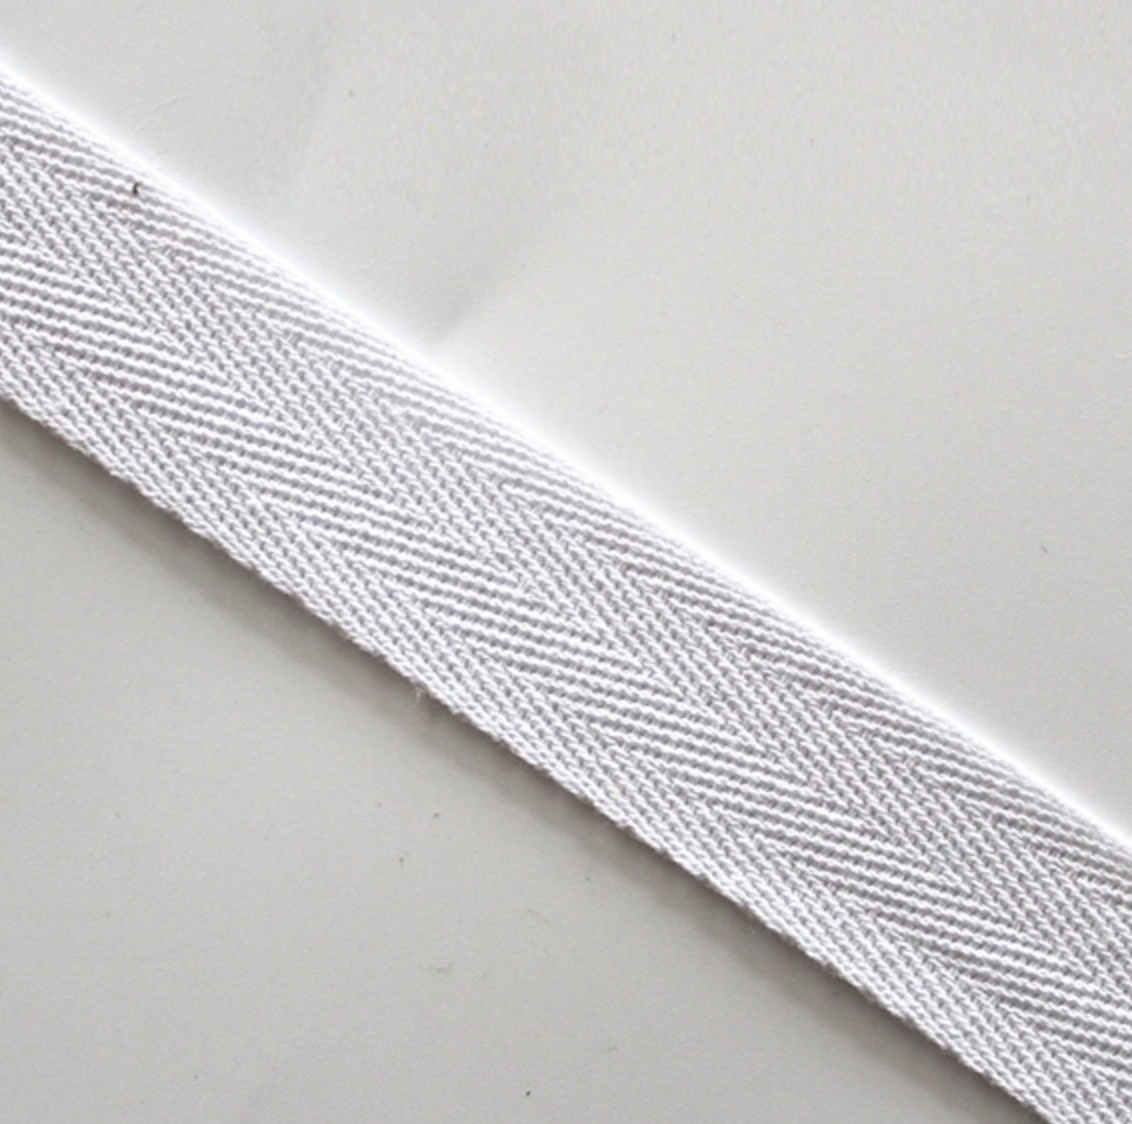 19mm Herringbone Twill Tape 100% Cotton - White - By the Yard